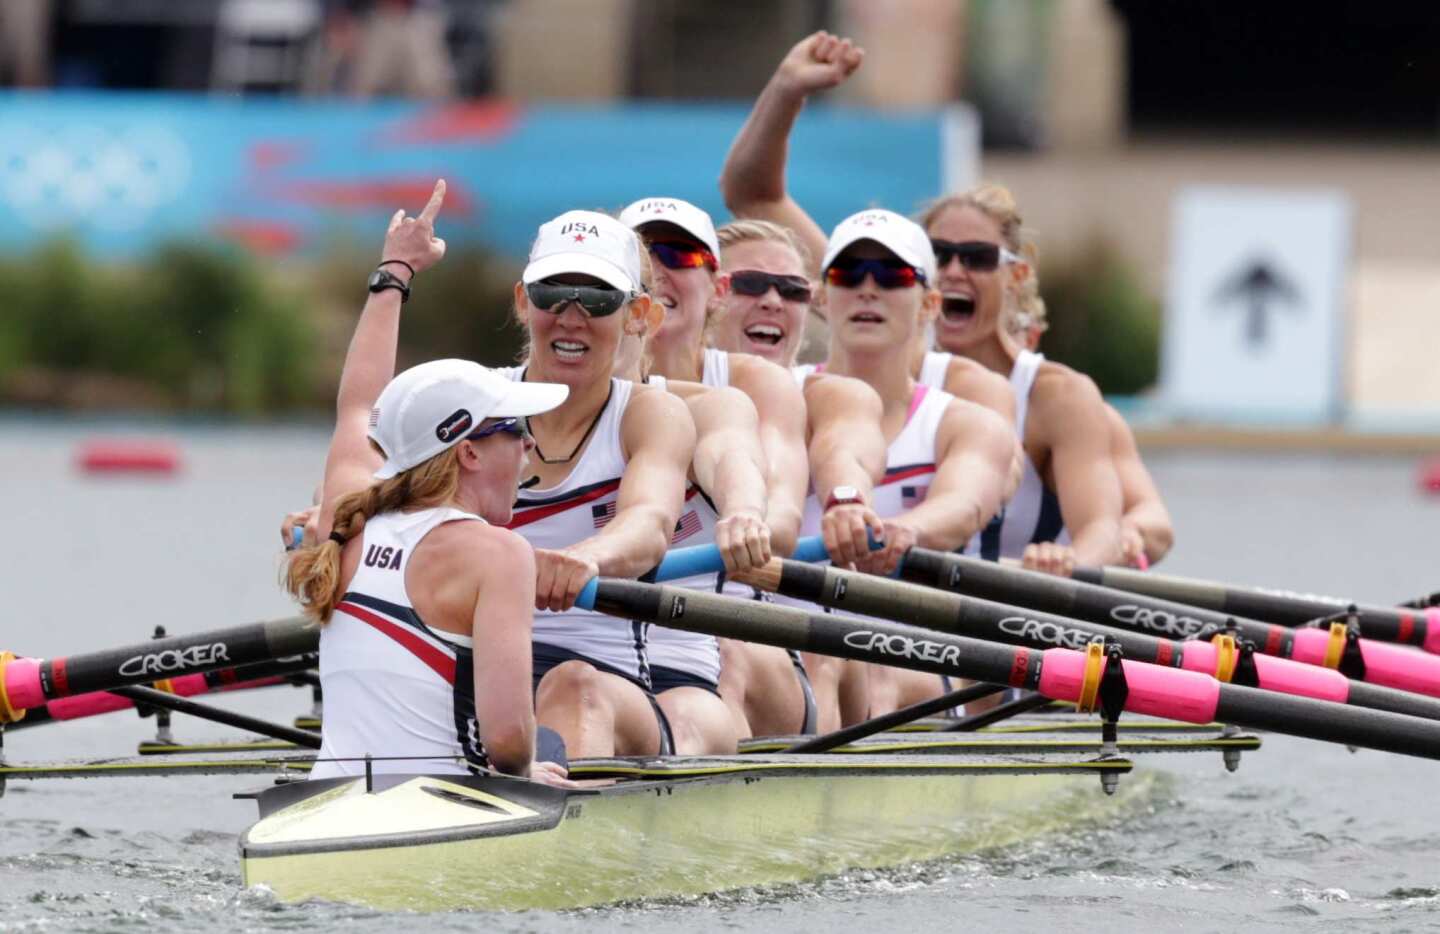 Women's eight rowing team